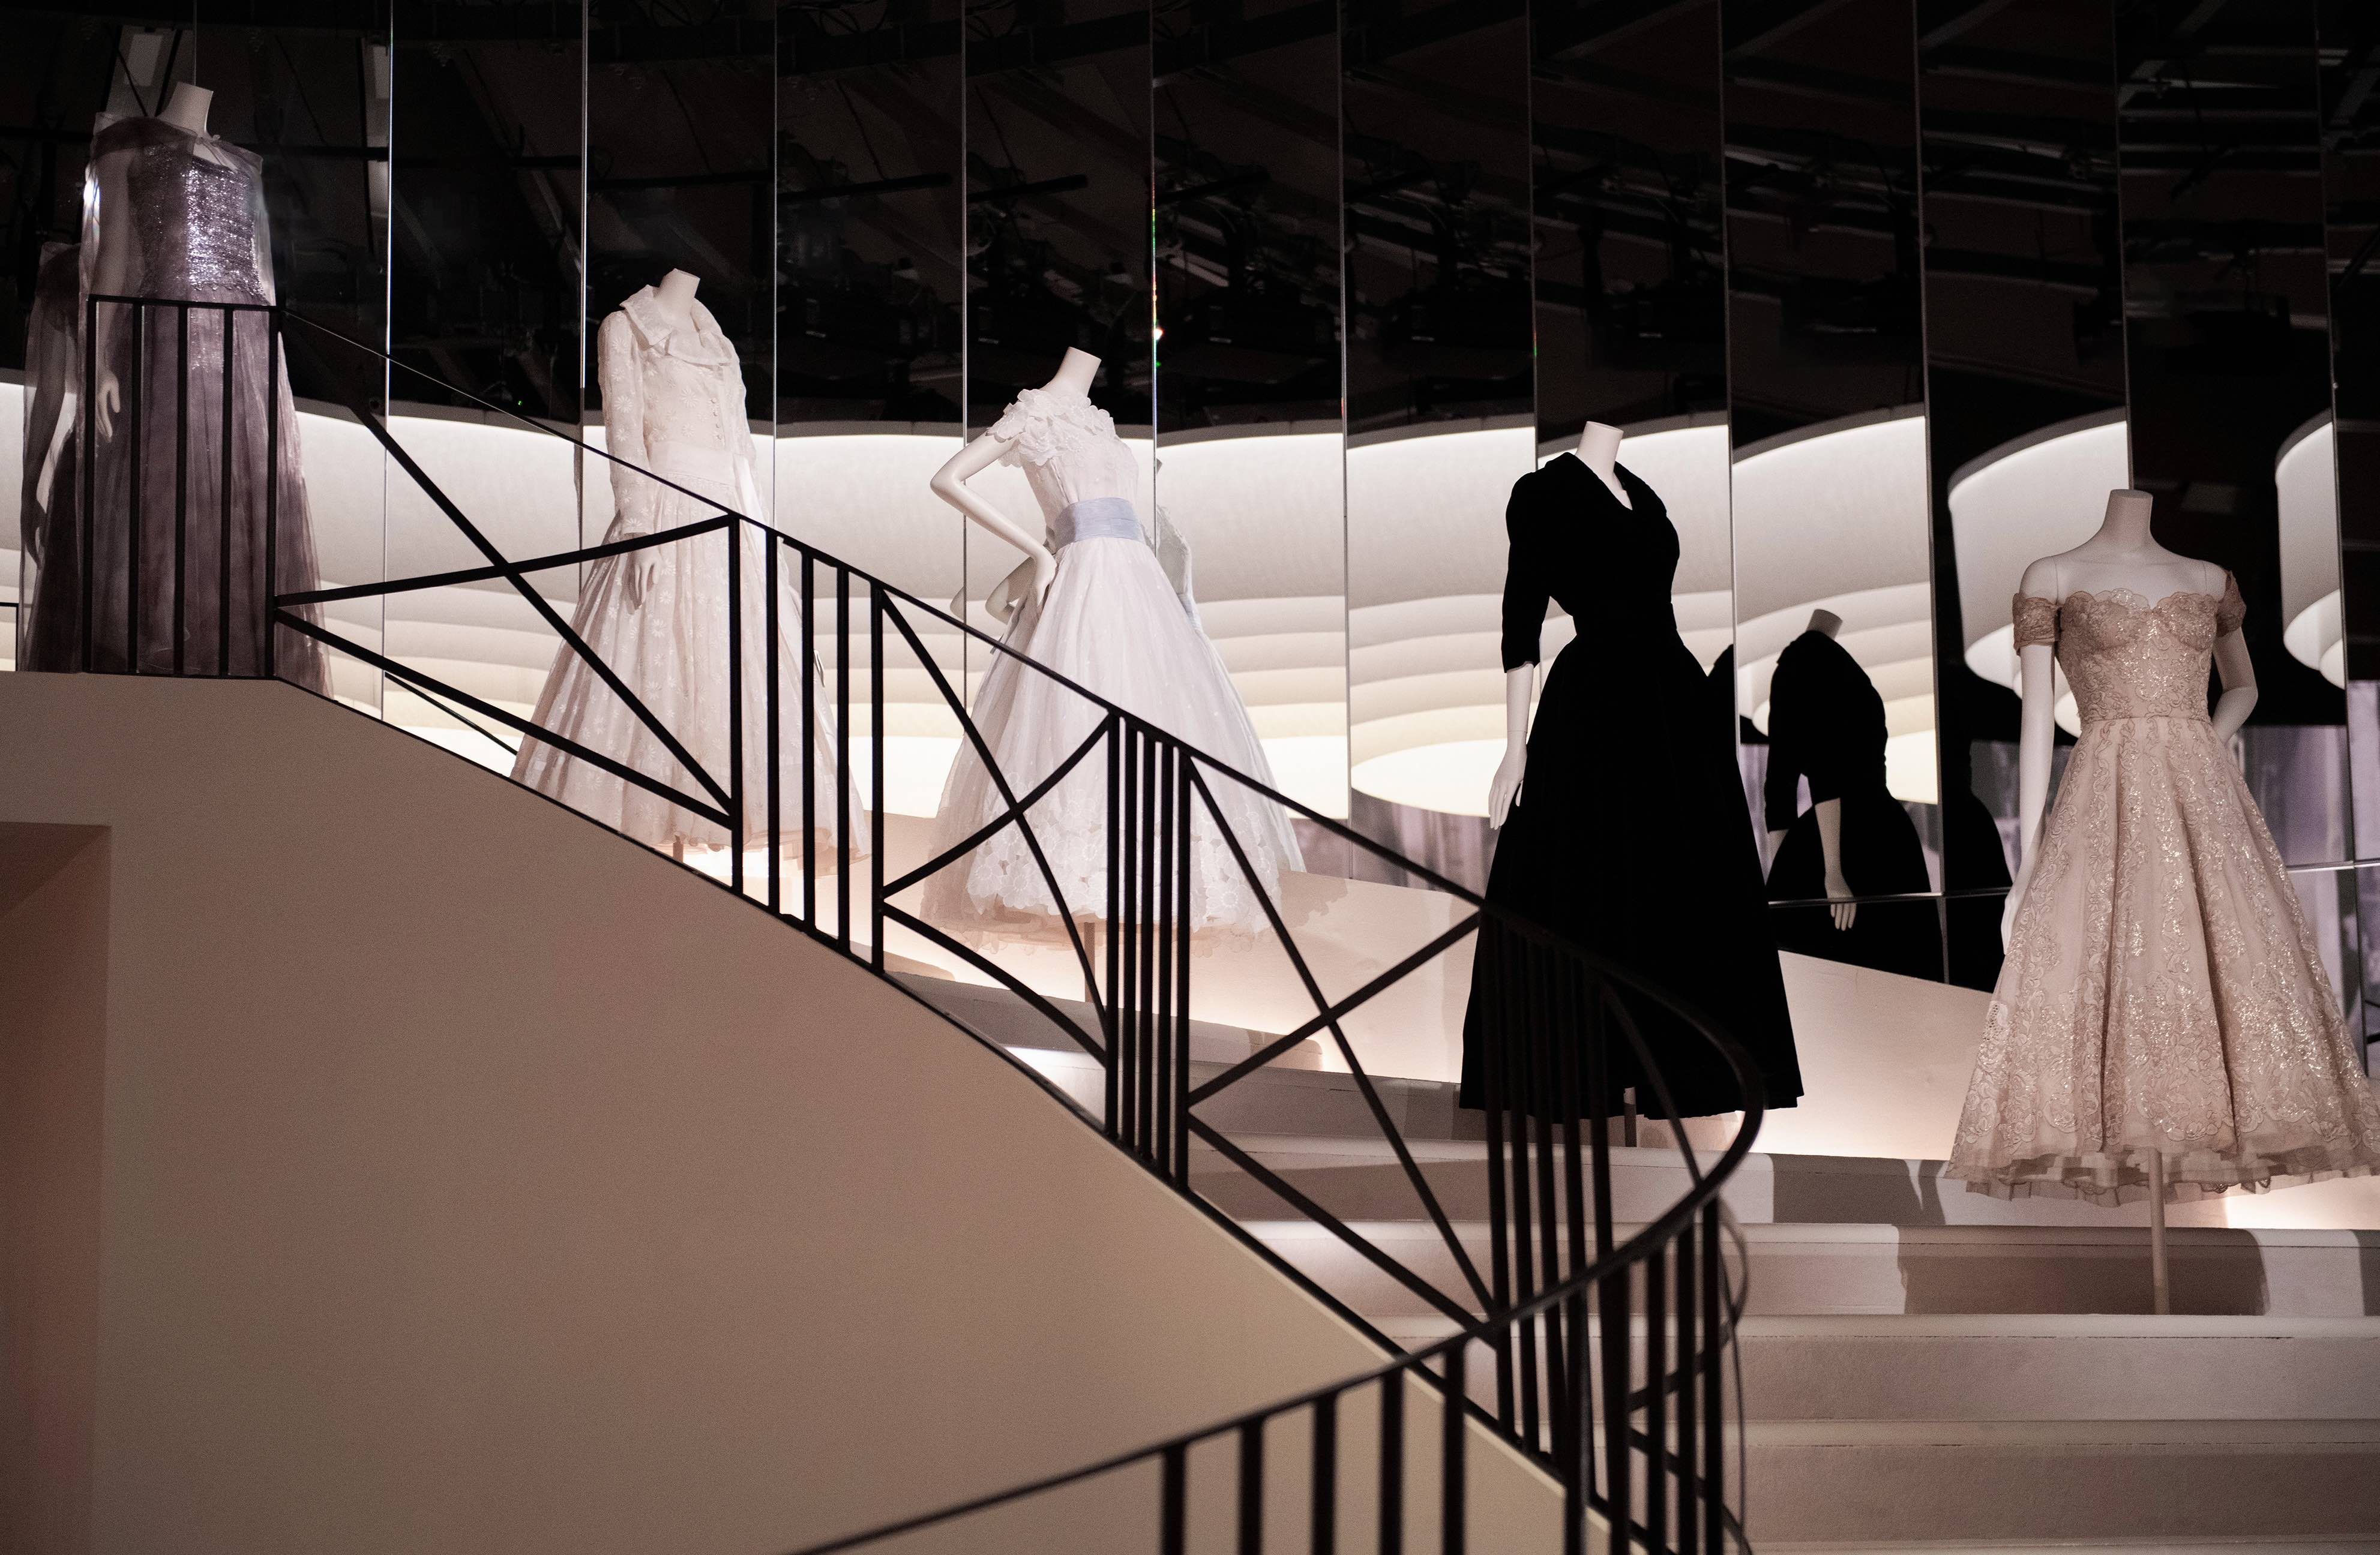 Chanel Exhibition Comes To London Saatchi Gallery, British Vogue